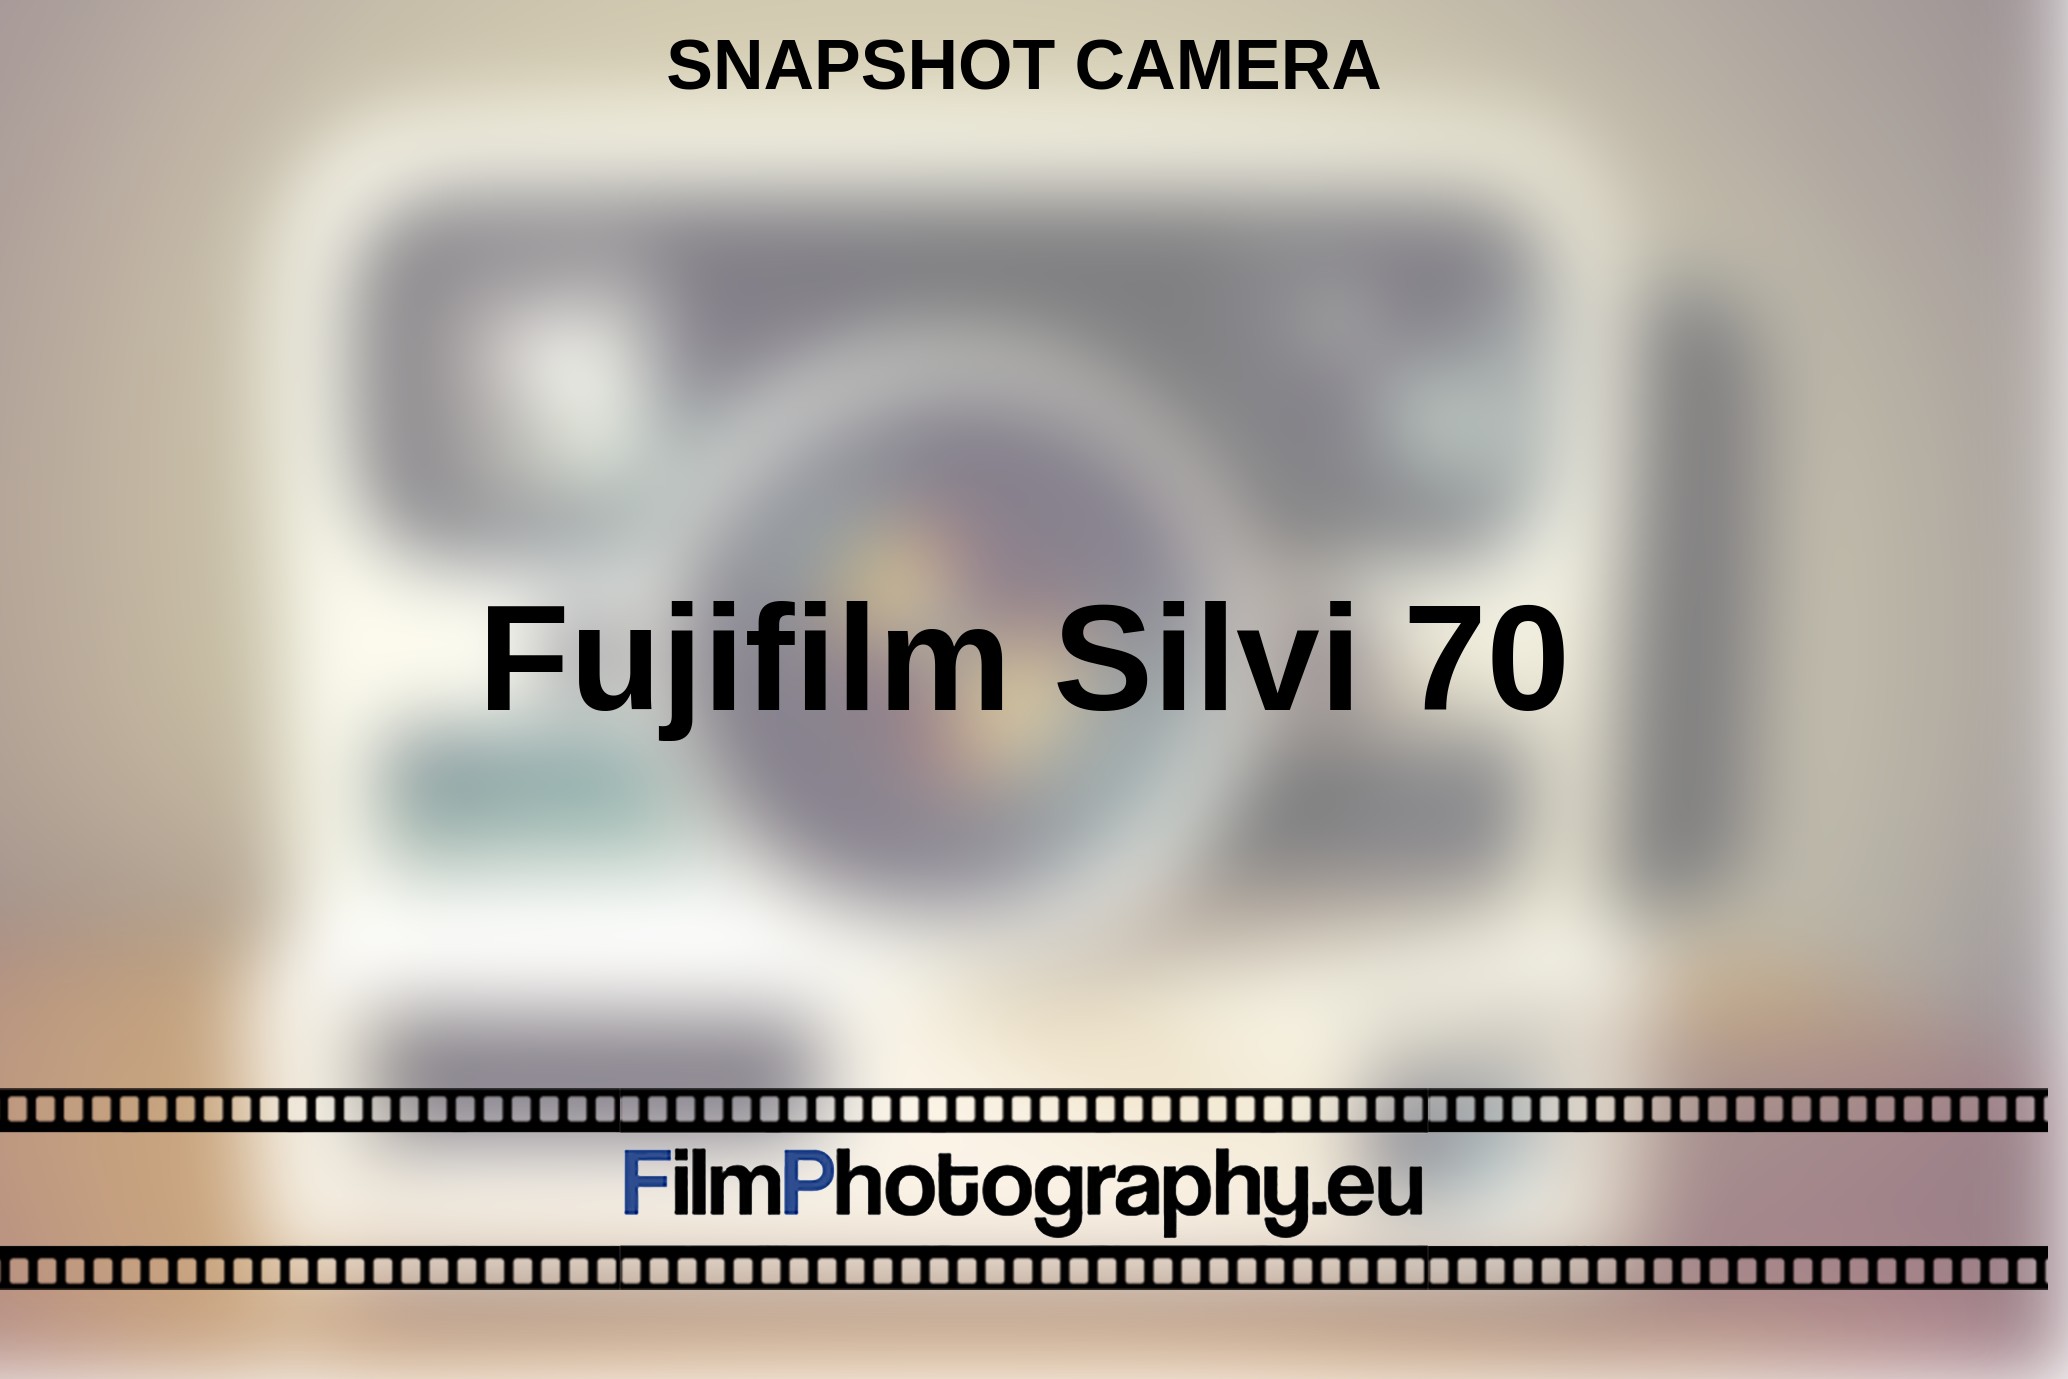 Fujifilm-Silvi-70-snapshot-camera-bnv.jpg